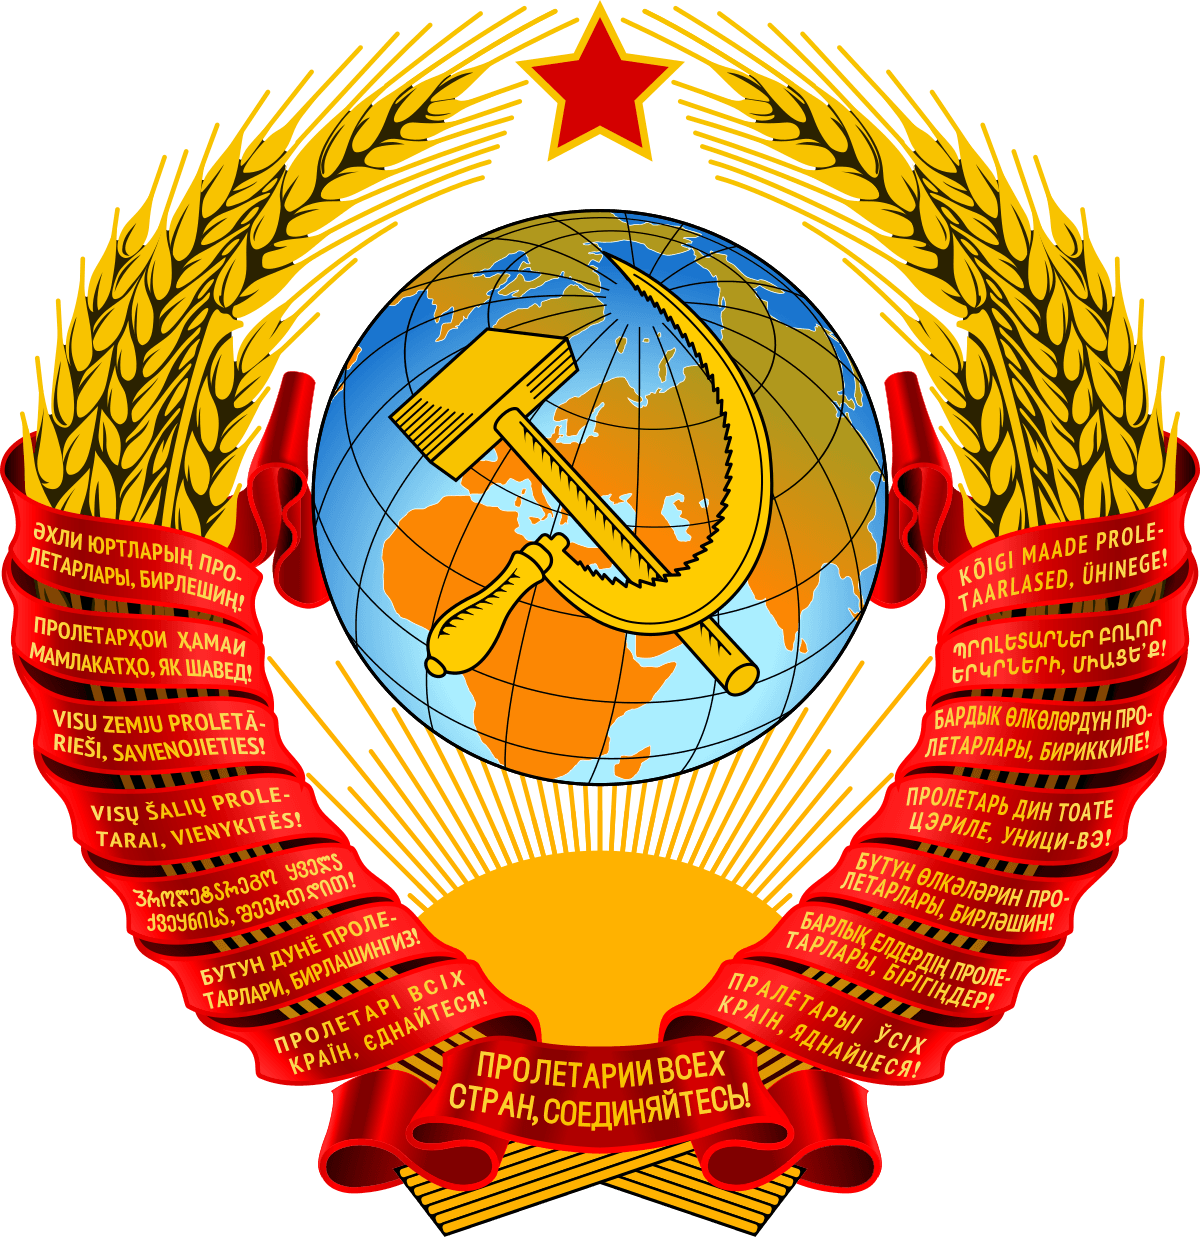 Soviet Union Logo - State Emblem of the Soviet Union